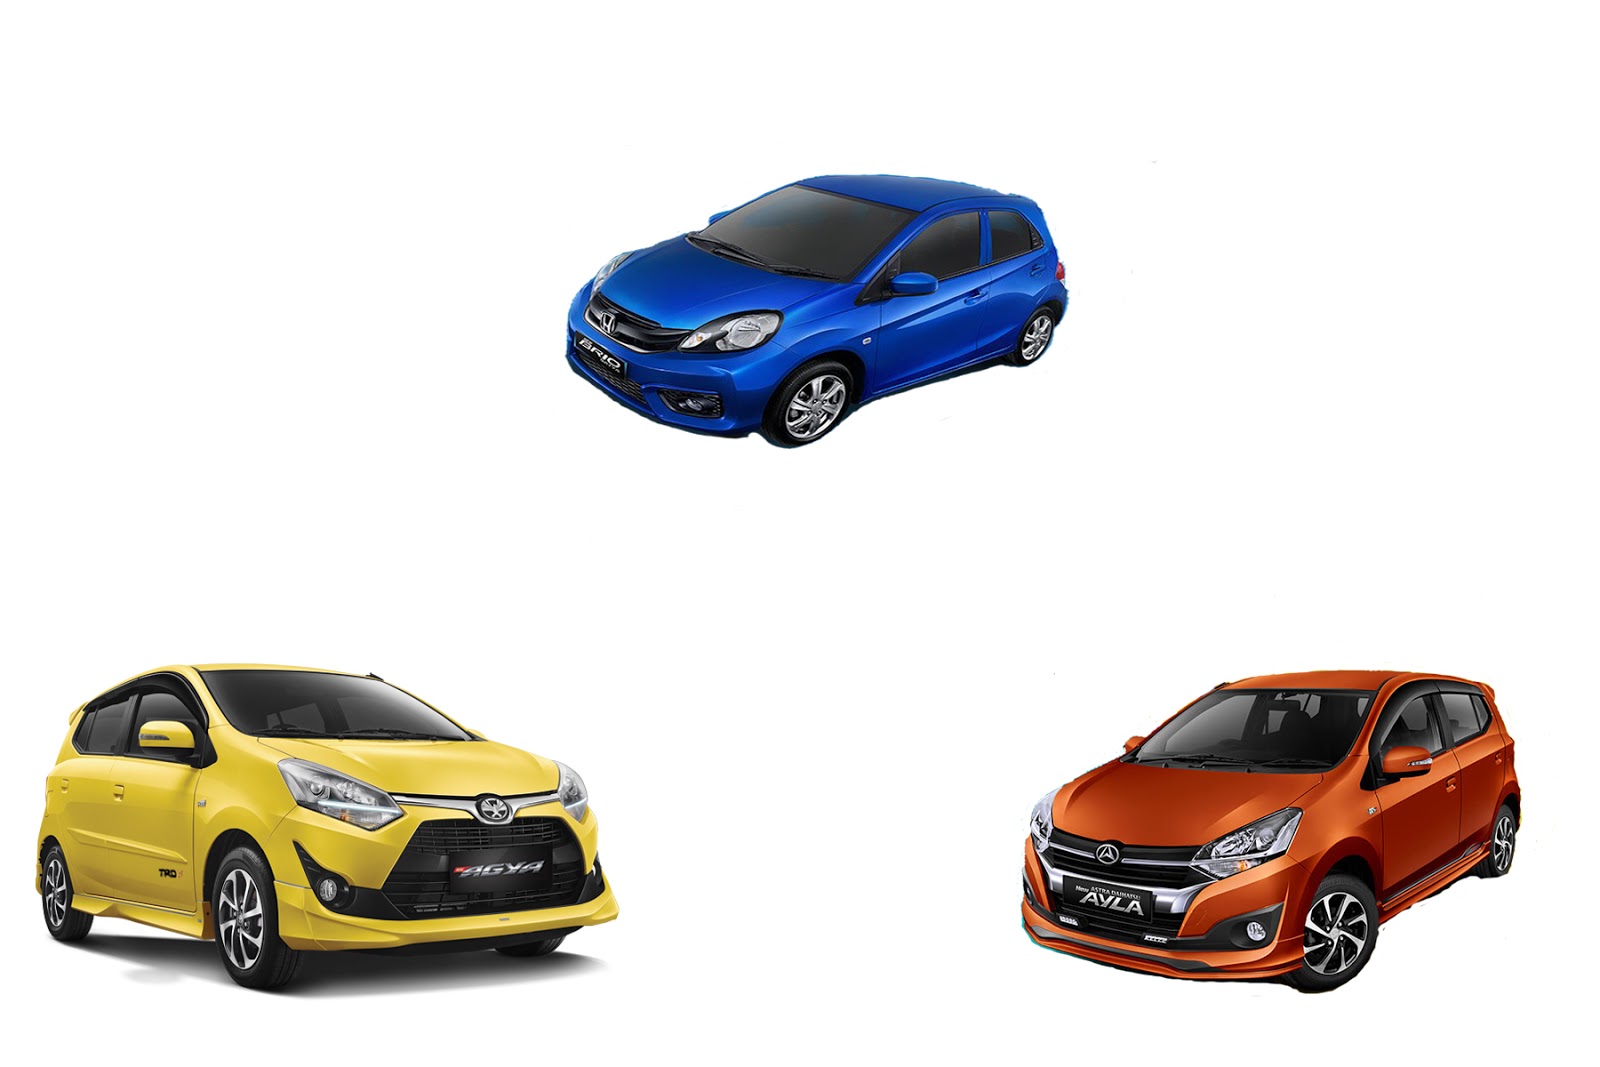 Adu Keunggulan Dan Kelebihan New Toyota Agya Vs New Daihatsu Ayla